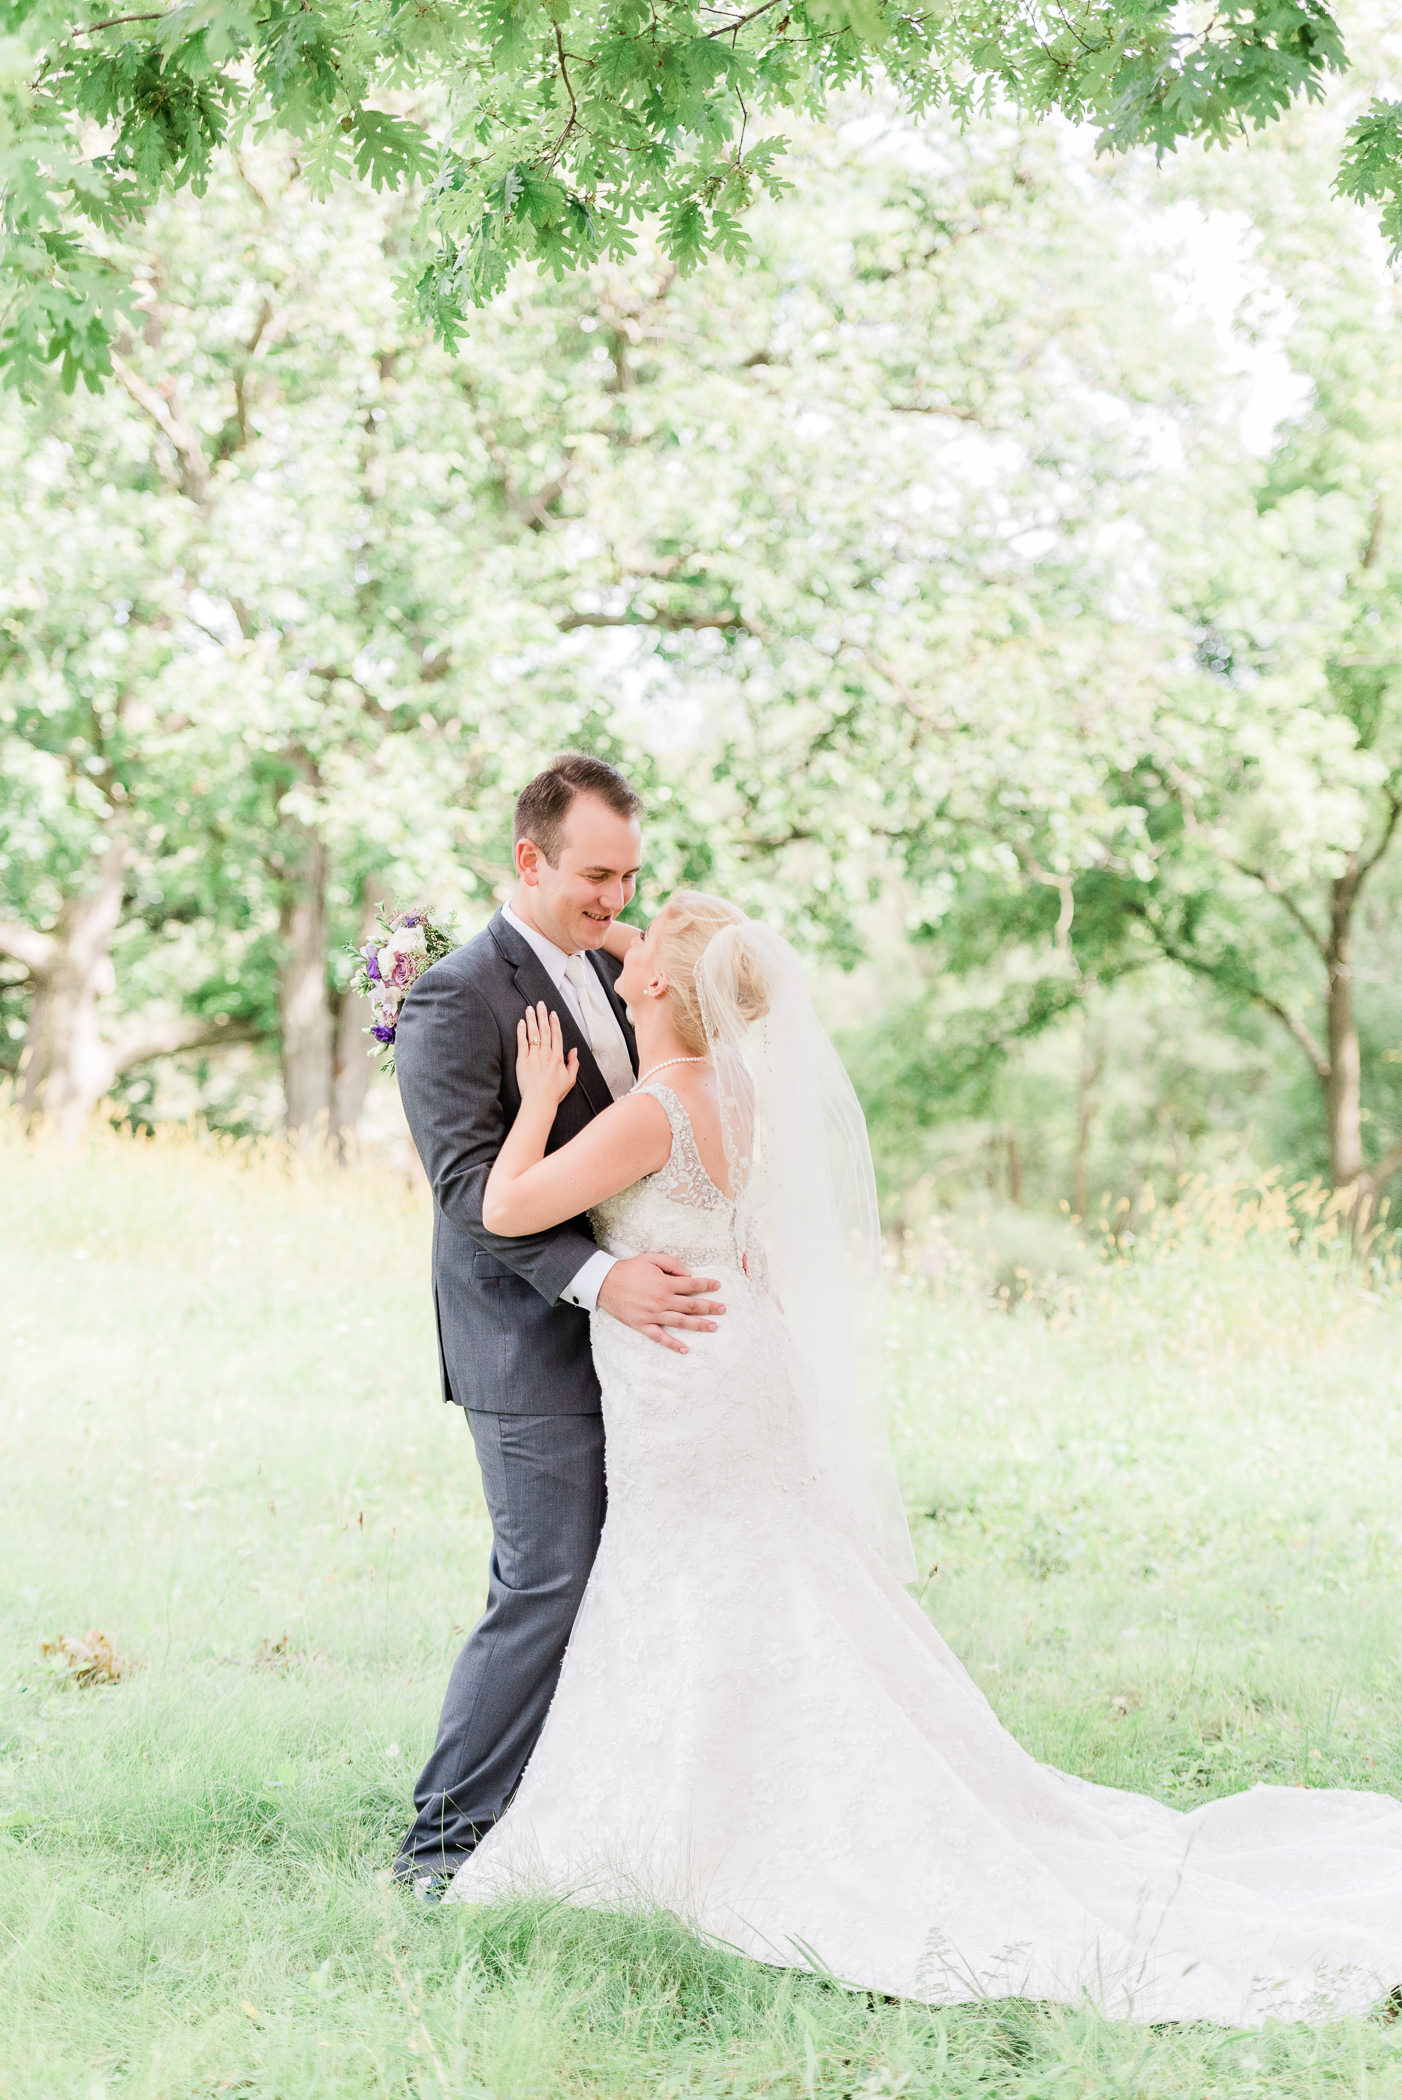 Leah & Robbie - Chandler’s Wedding Photographers - Larissa Marie ...